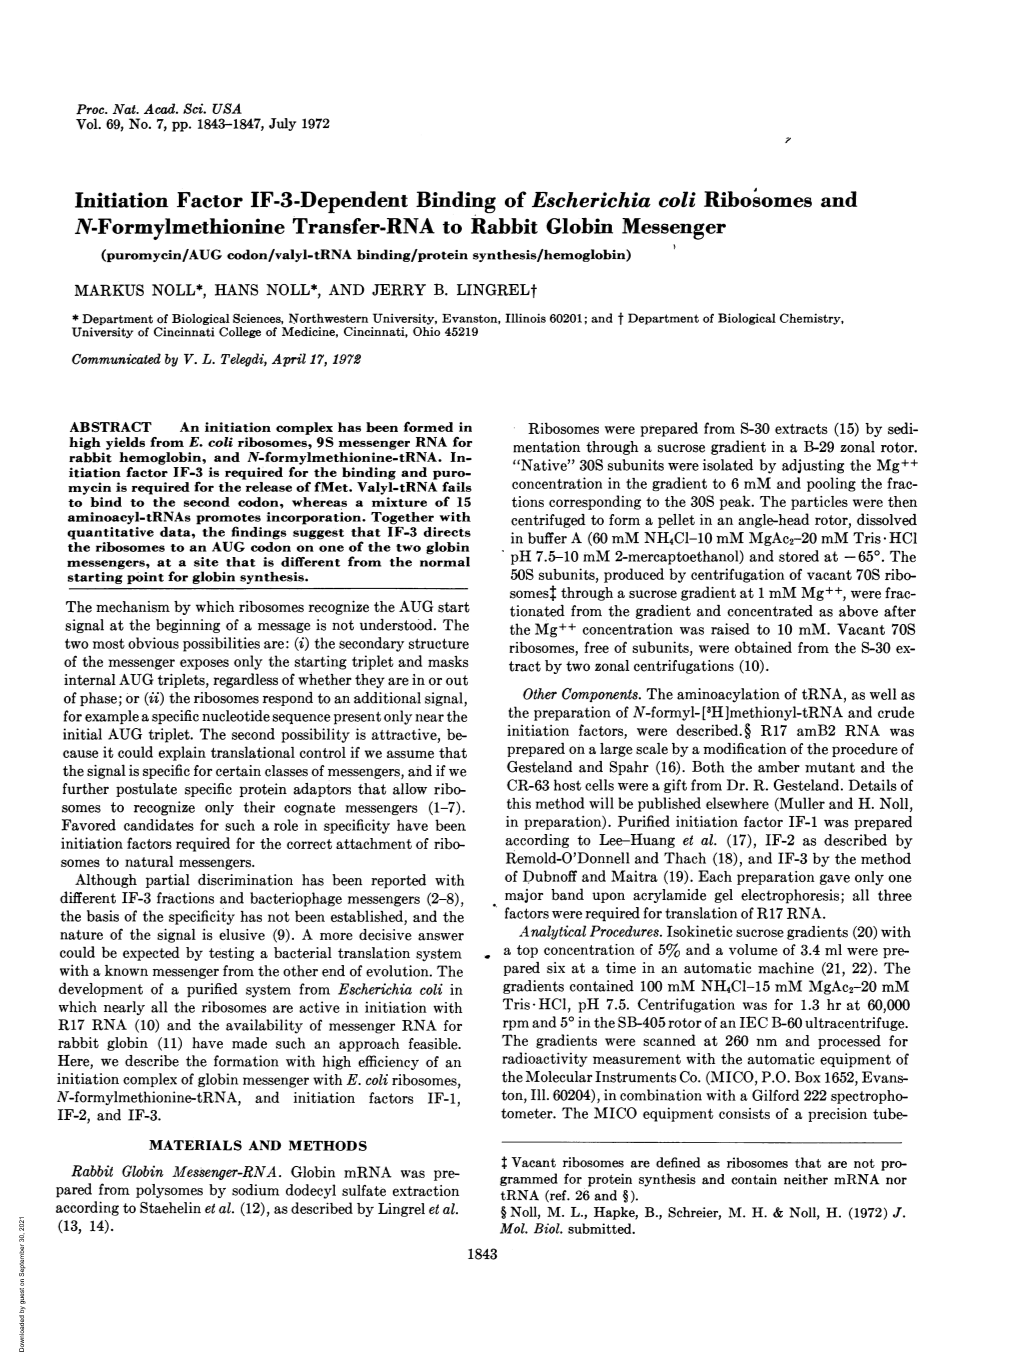 Initiation Factor IF-3-Dependent Binding of Escherichia Coli